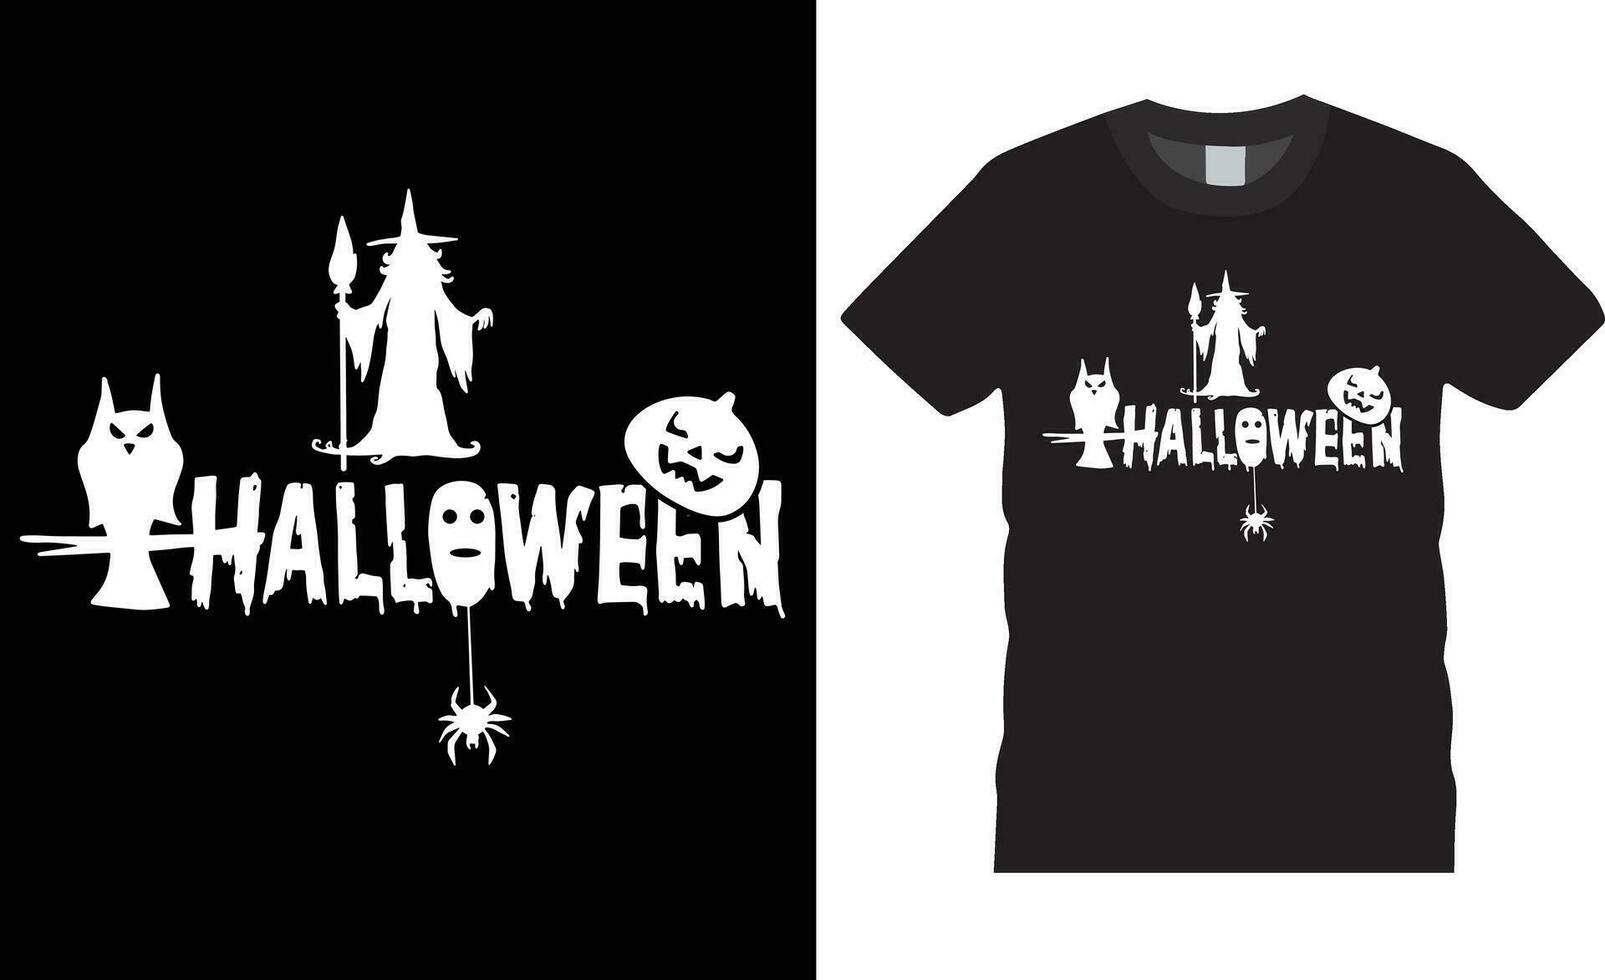 Halloween maglietta design. contento Halloween tipografia maglietta design vettore modello.halloween